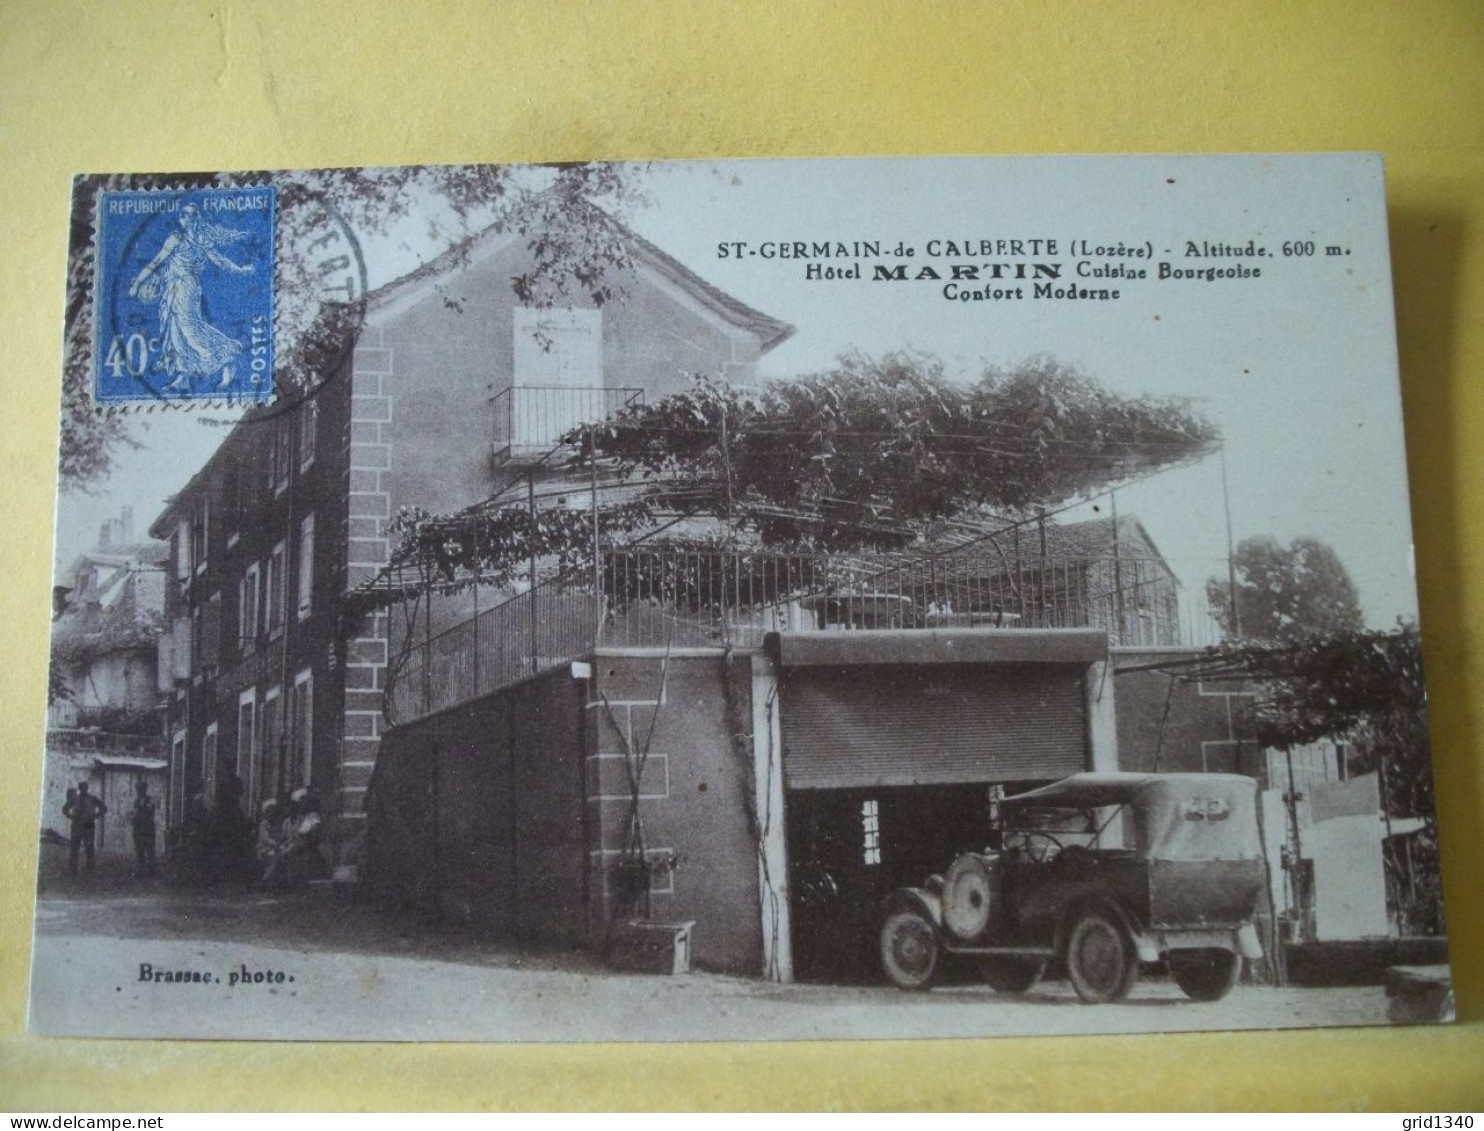 48 8117 RARE CPA 1932 - 48 ST GERMAIN DE CALBERTE - HOTEL MARTIN. CUISINE BOURGEOISE. CONFORT MODERNE - ANIMATION. AUTO - Hotels & Restaurants